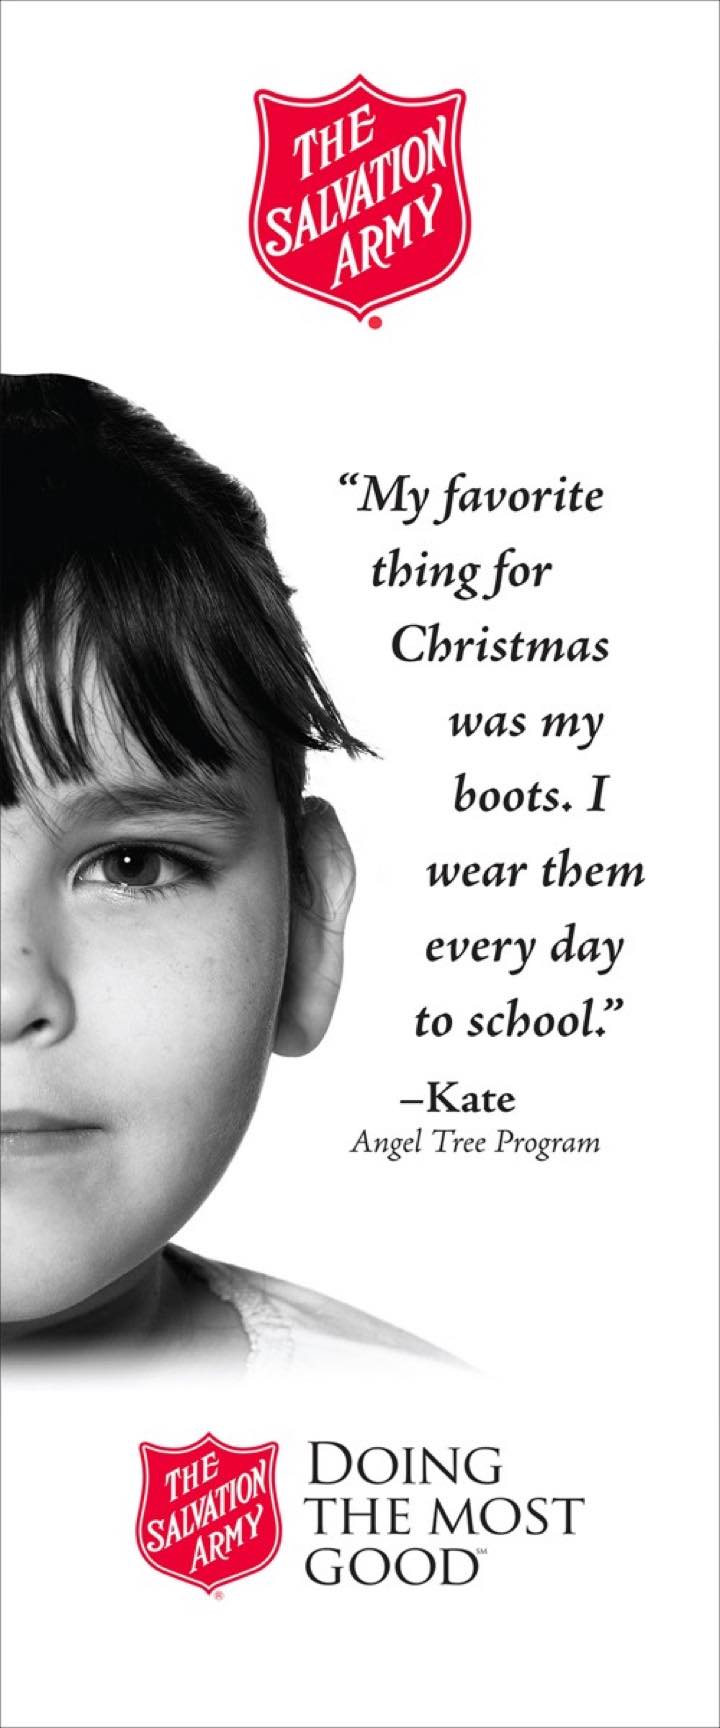 Angel Tree Program Poster